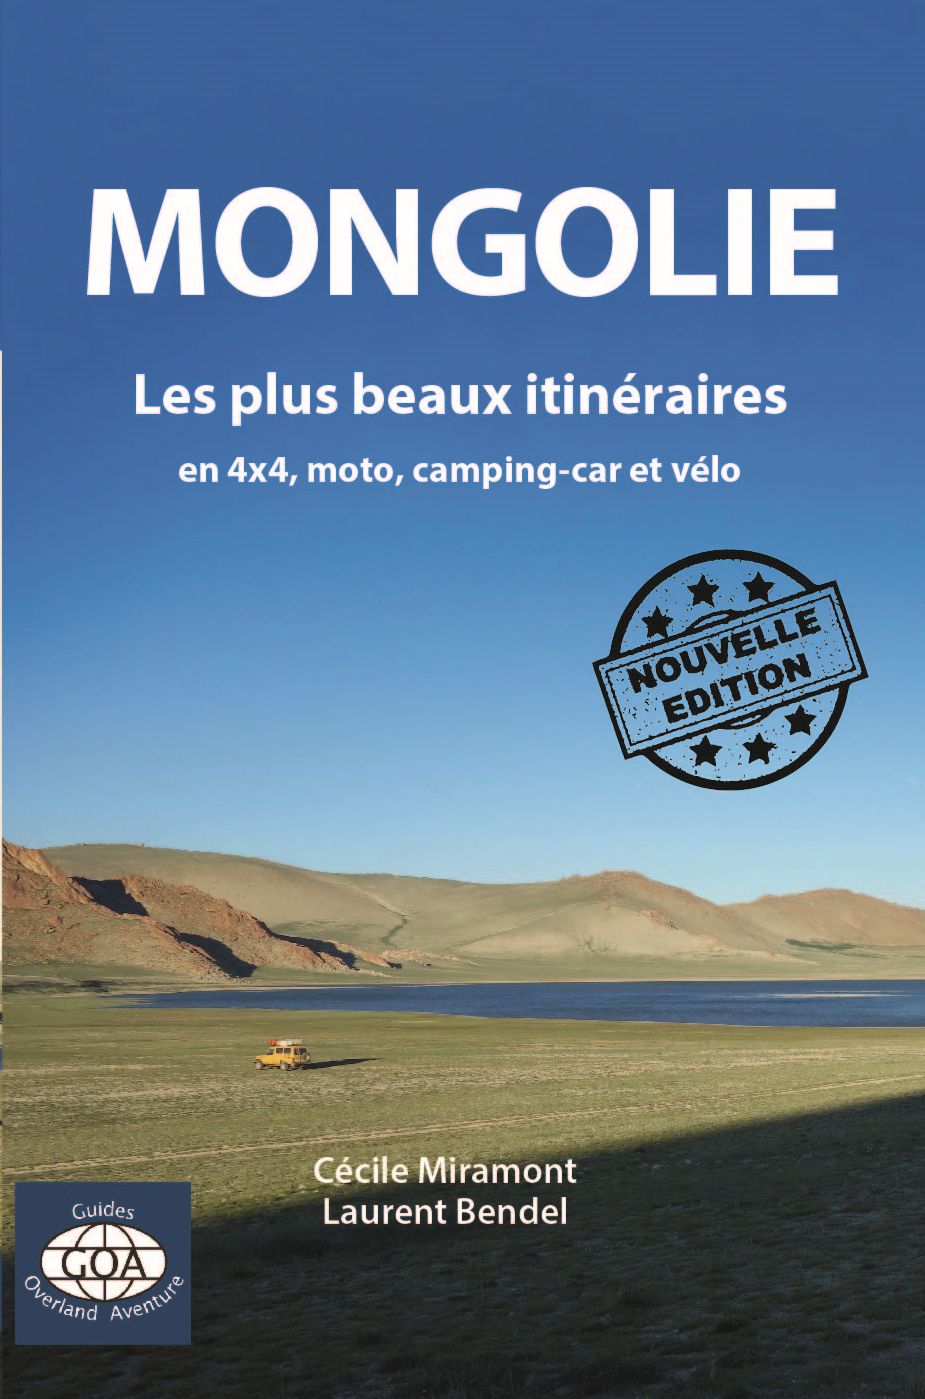 mongolie voyage gouv